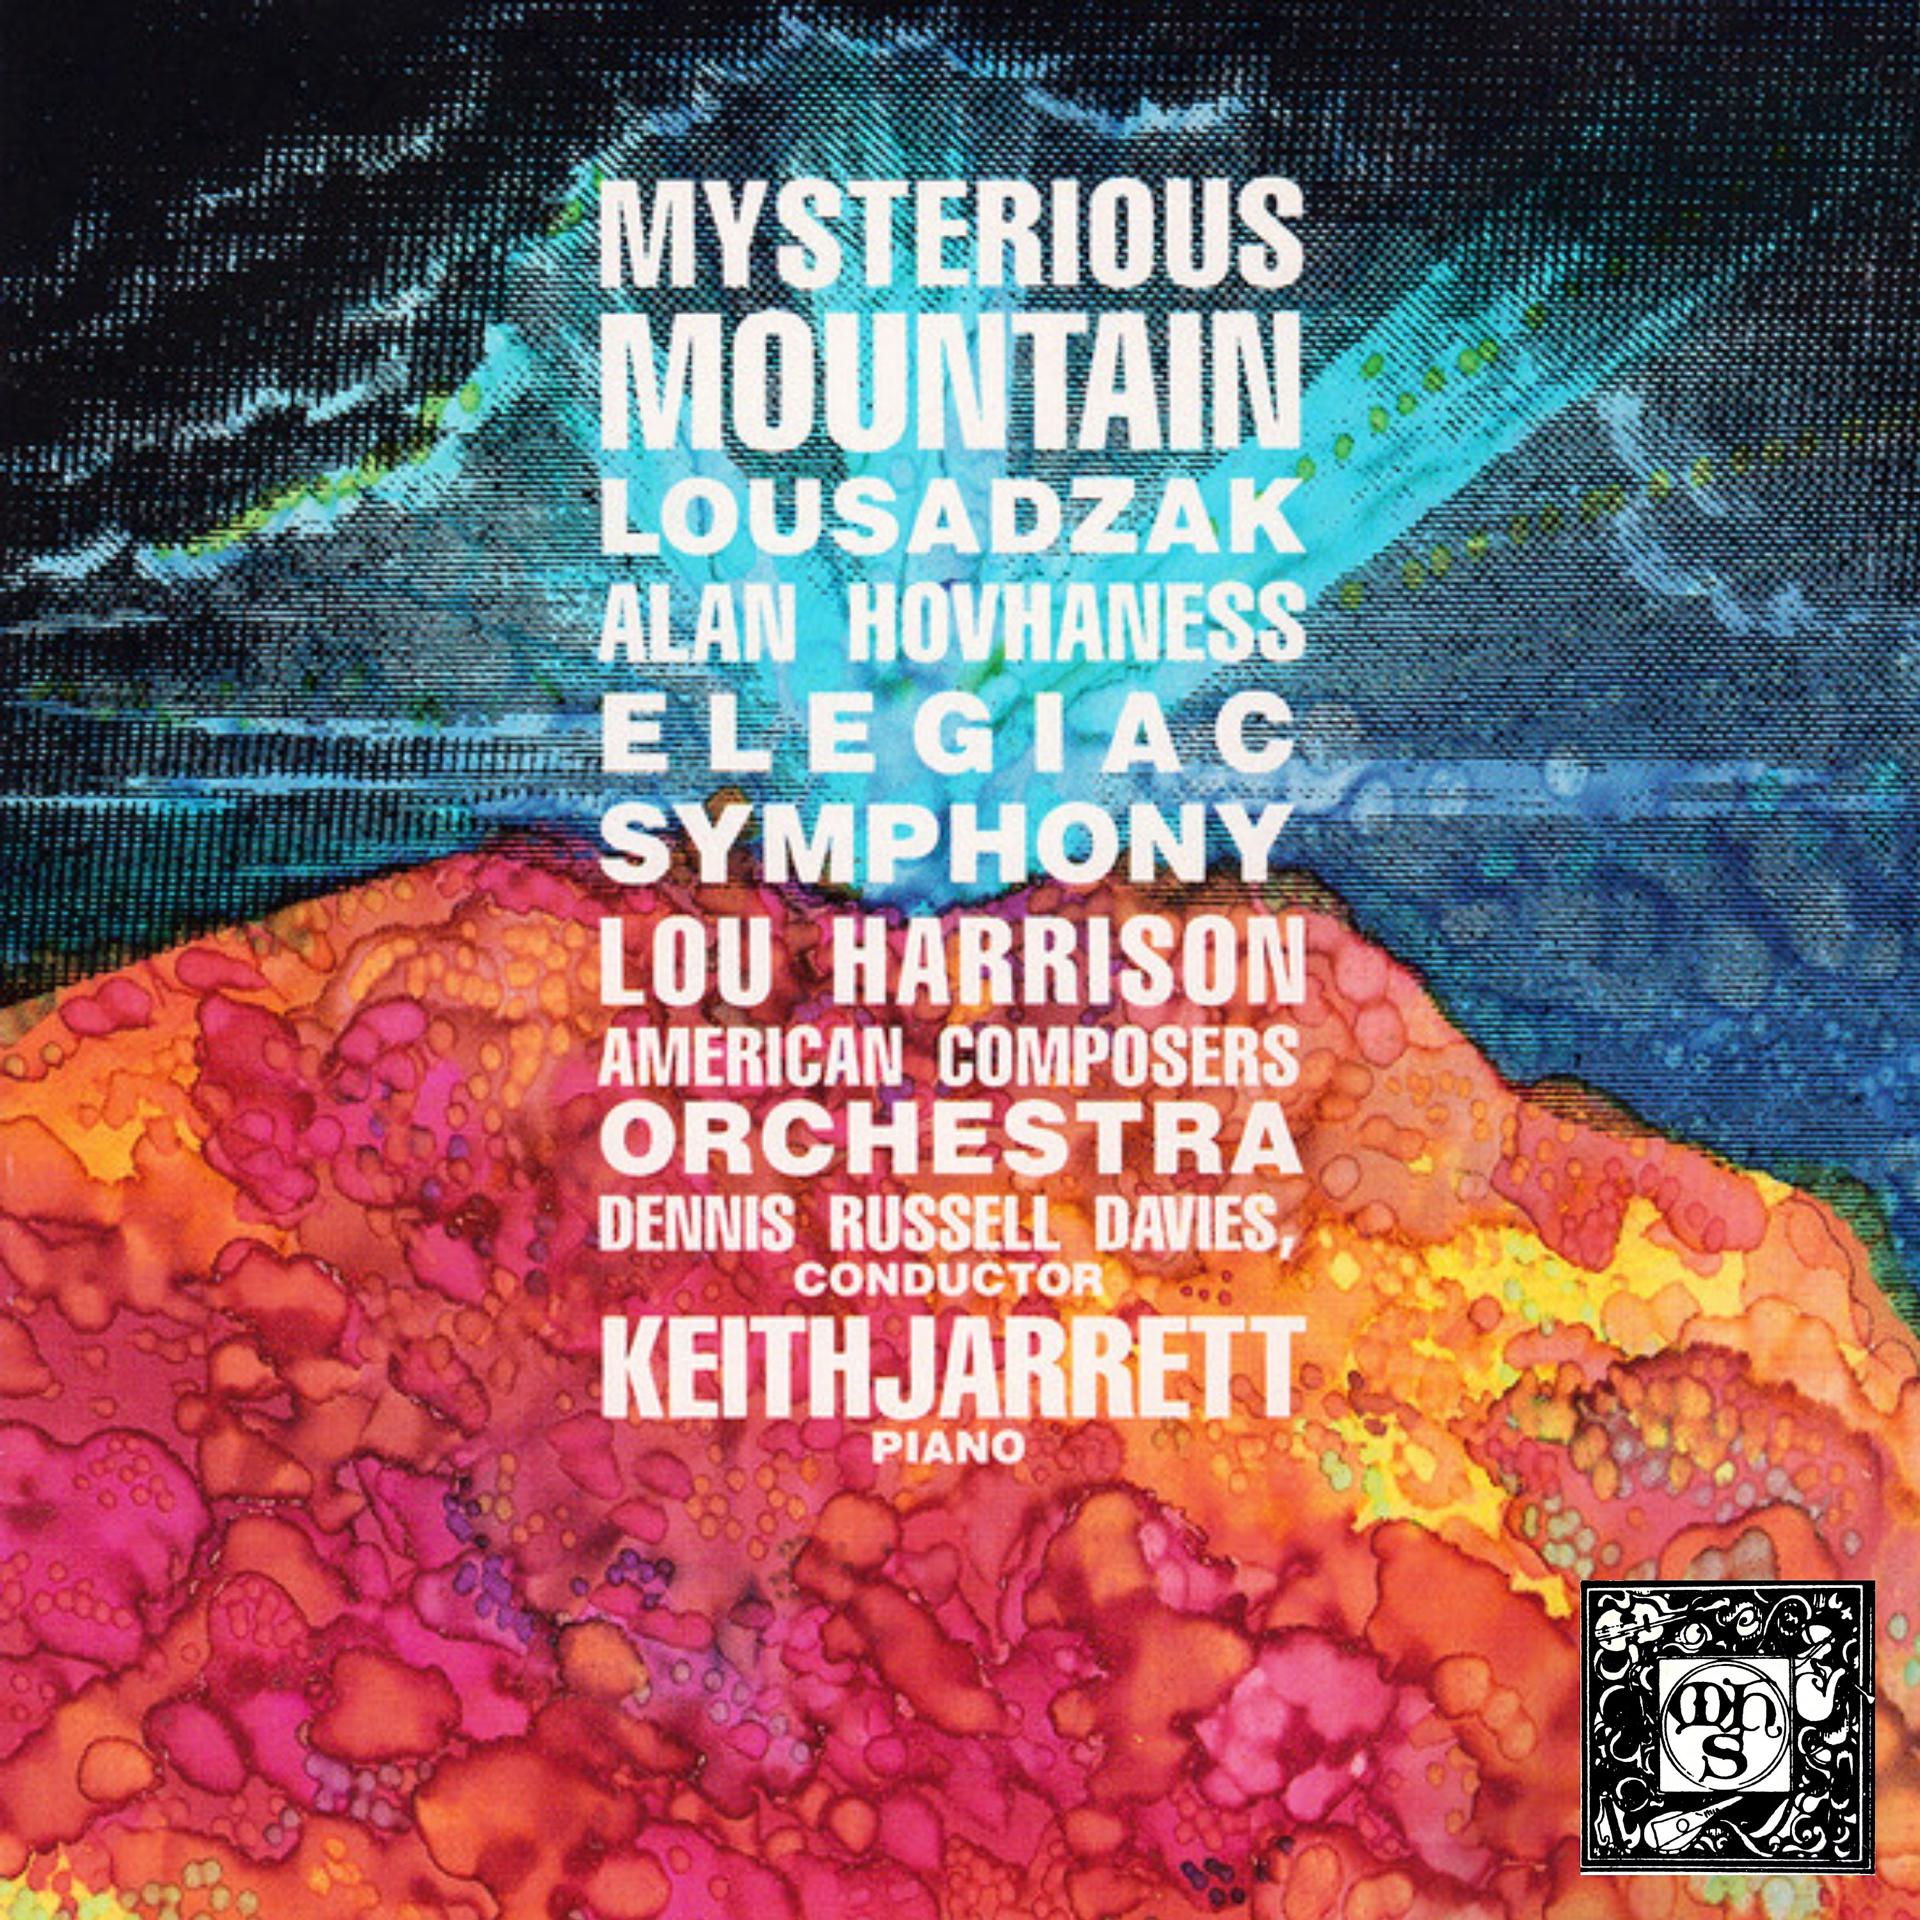 Постер альбома "Mysterious Mountain", Lousadzak, Symphony No. 2 "Elegiac"